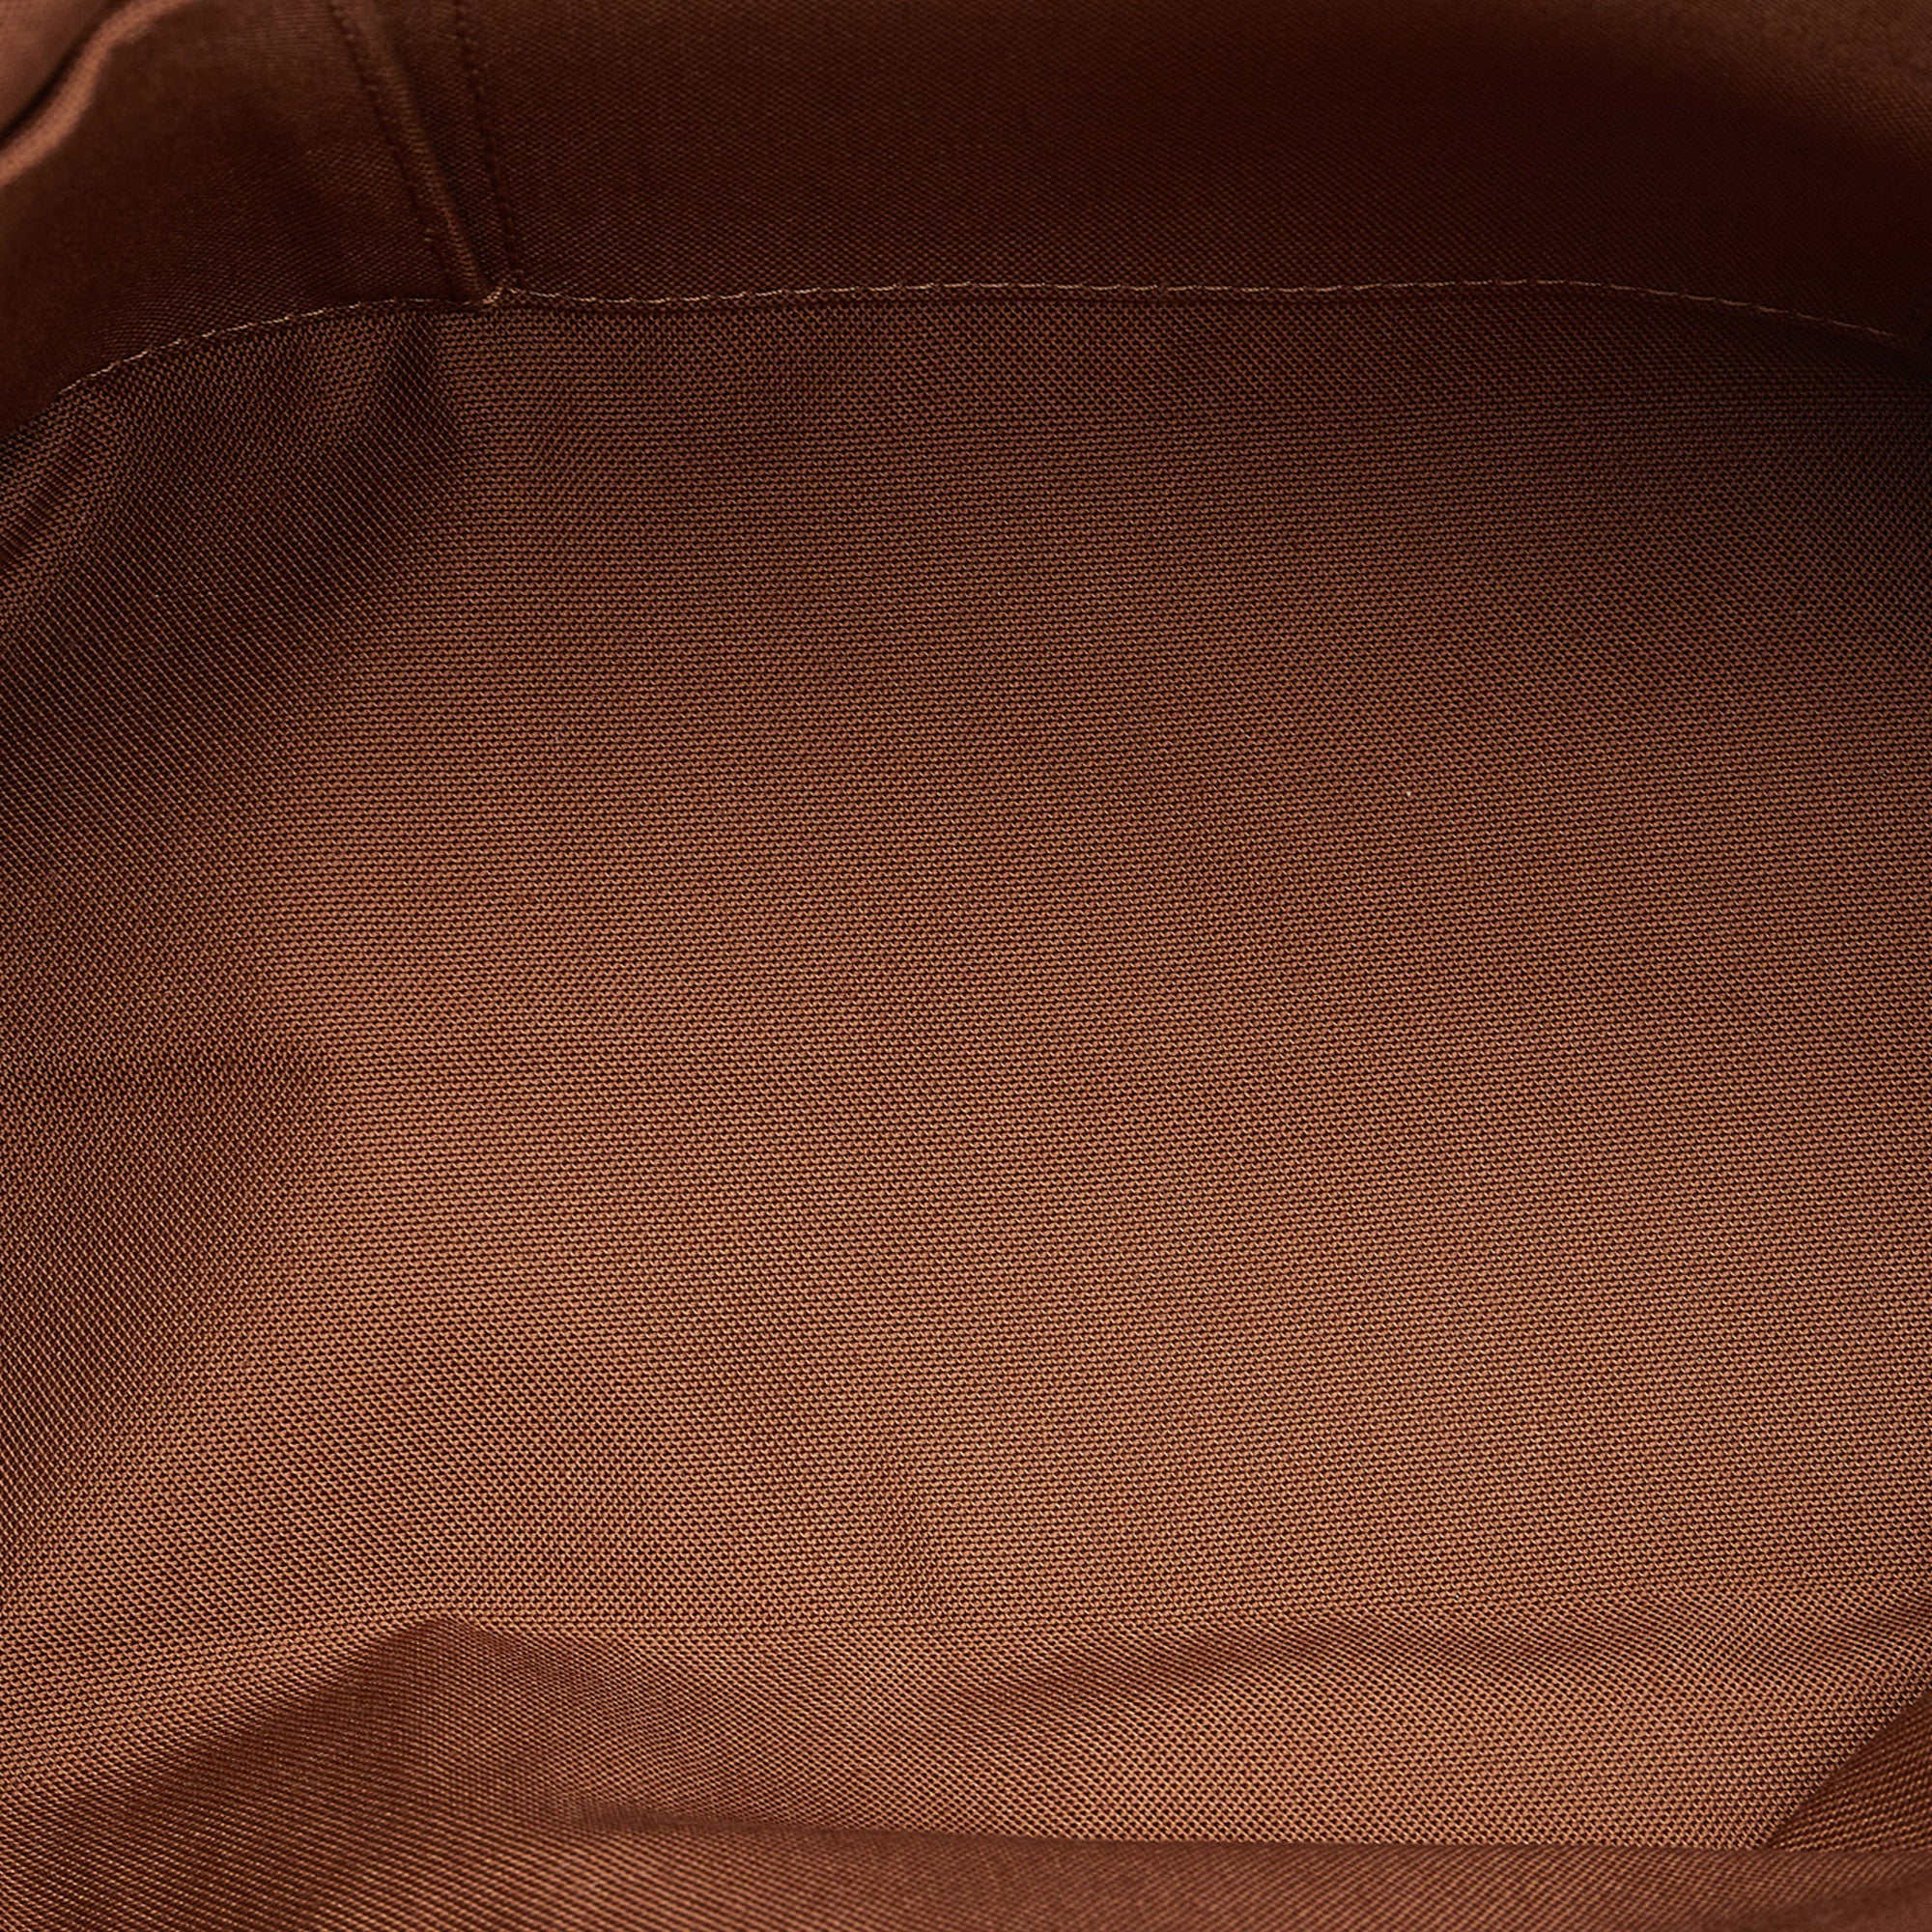 Louis Vuitton Sac Riveting Leather Bag